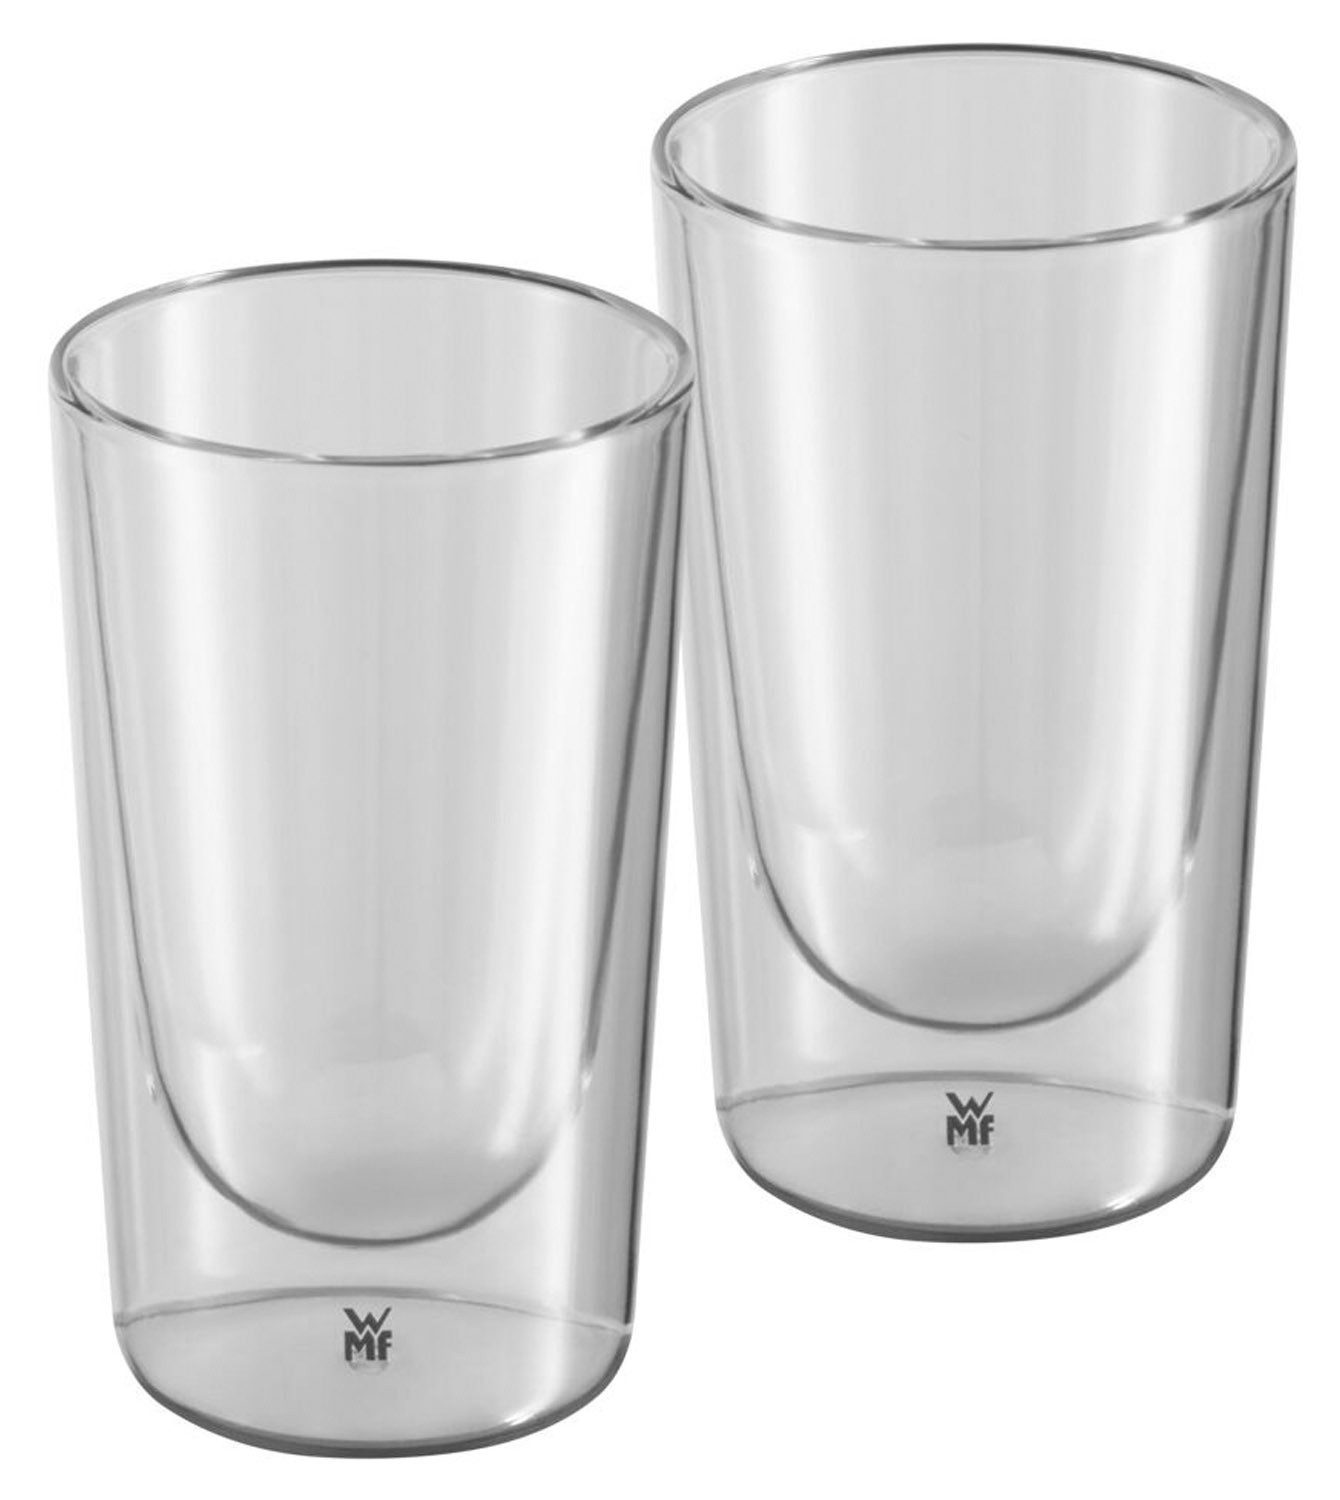 WMF Latte-Macchiato-Glas KINEO, 2er Set, 270 ml, Transparent, Borosilikatglas, hitzebeständig bis 120 °C, Spülmaschinengeeignet